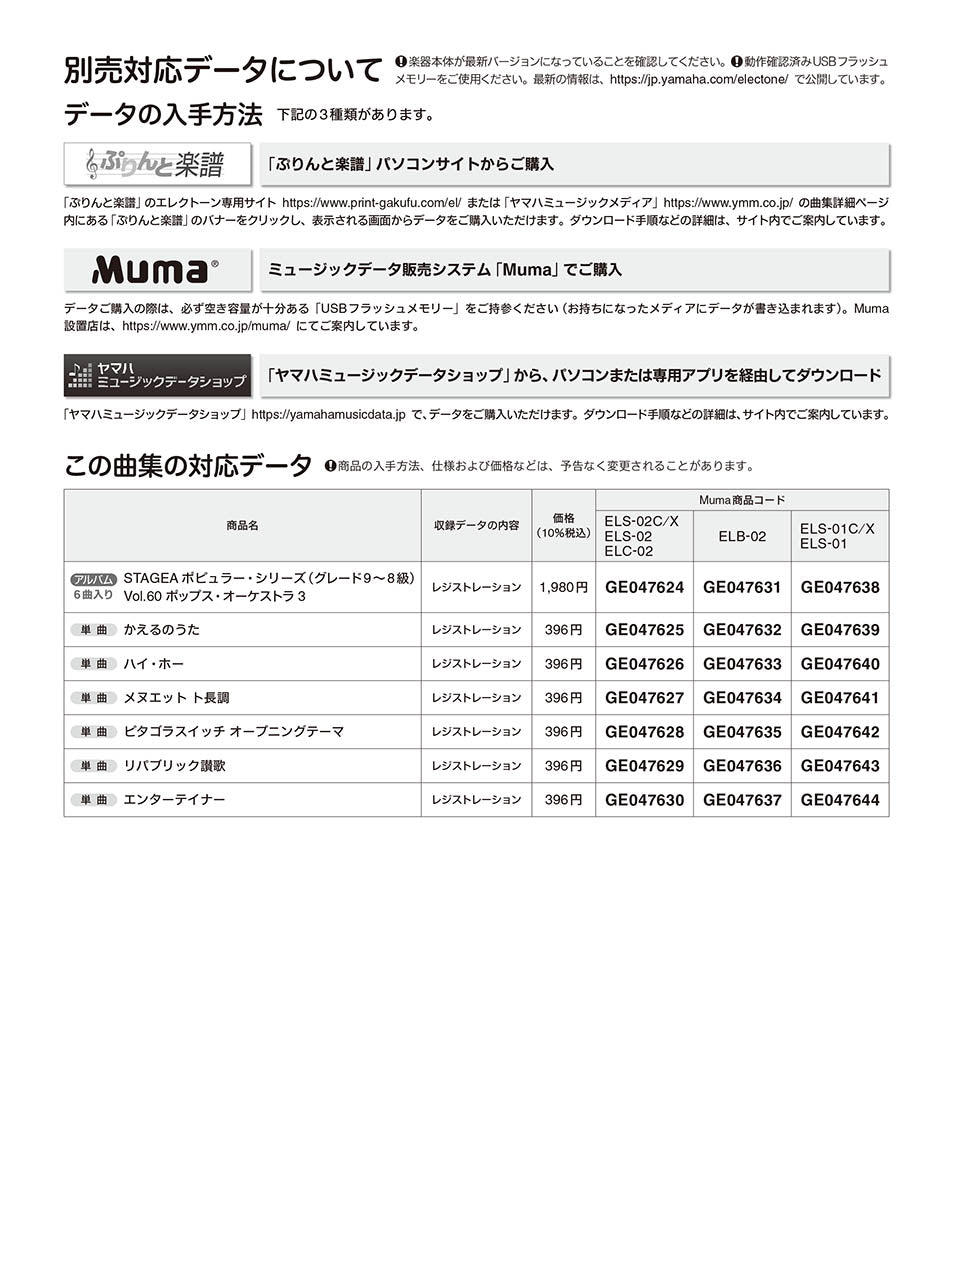 STAGEA ポピュラー 9～8級 Vol.60 ポップス・オーケストラ3